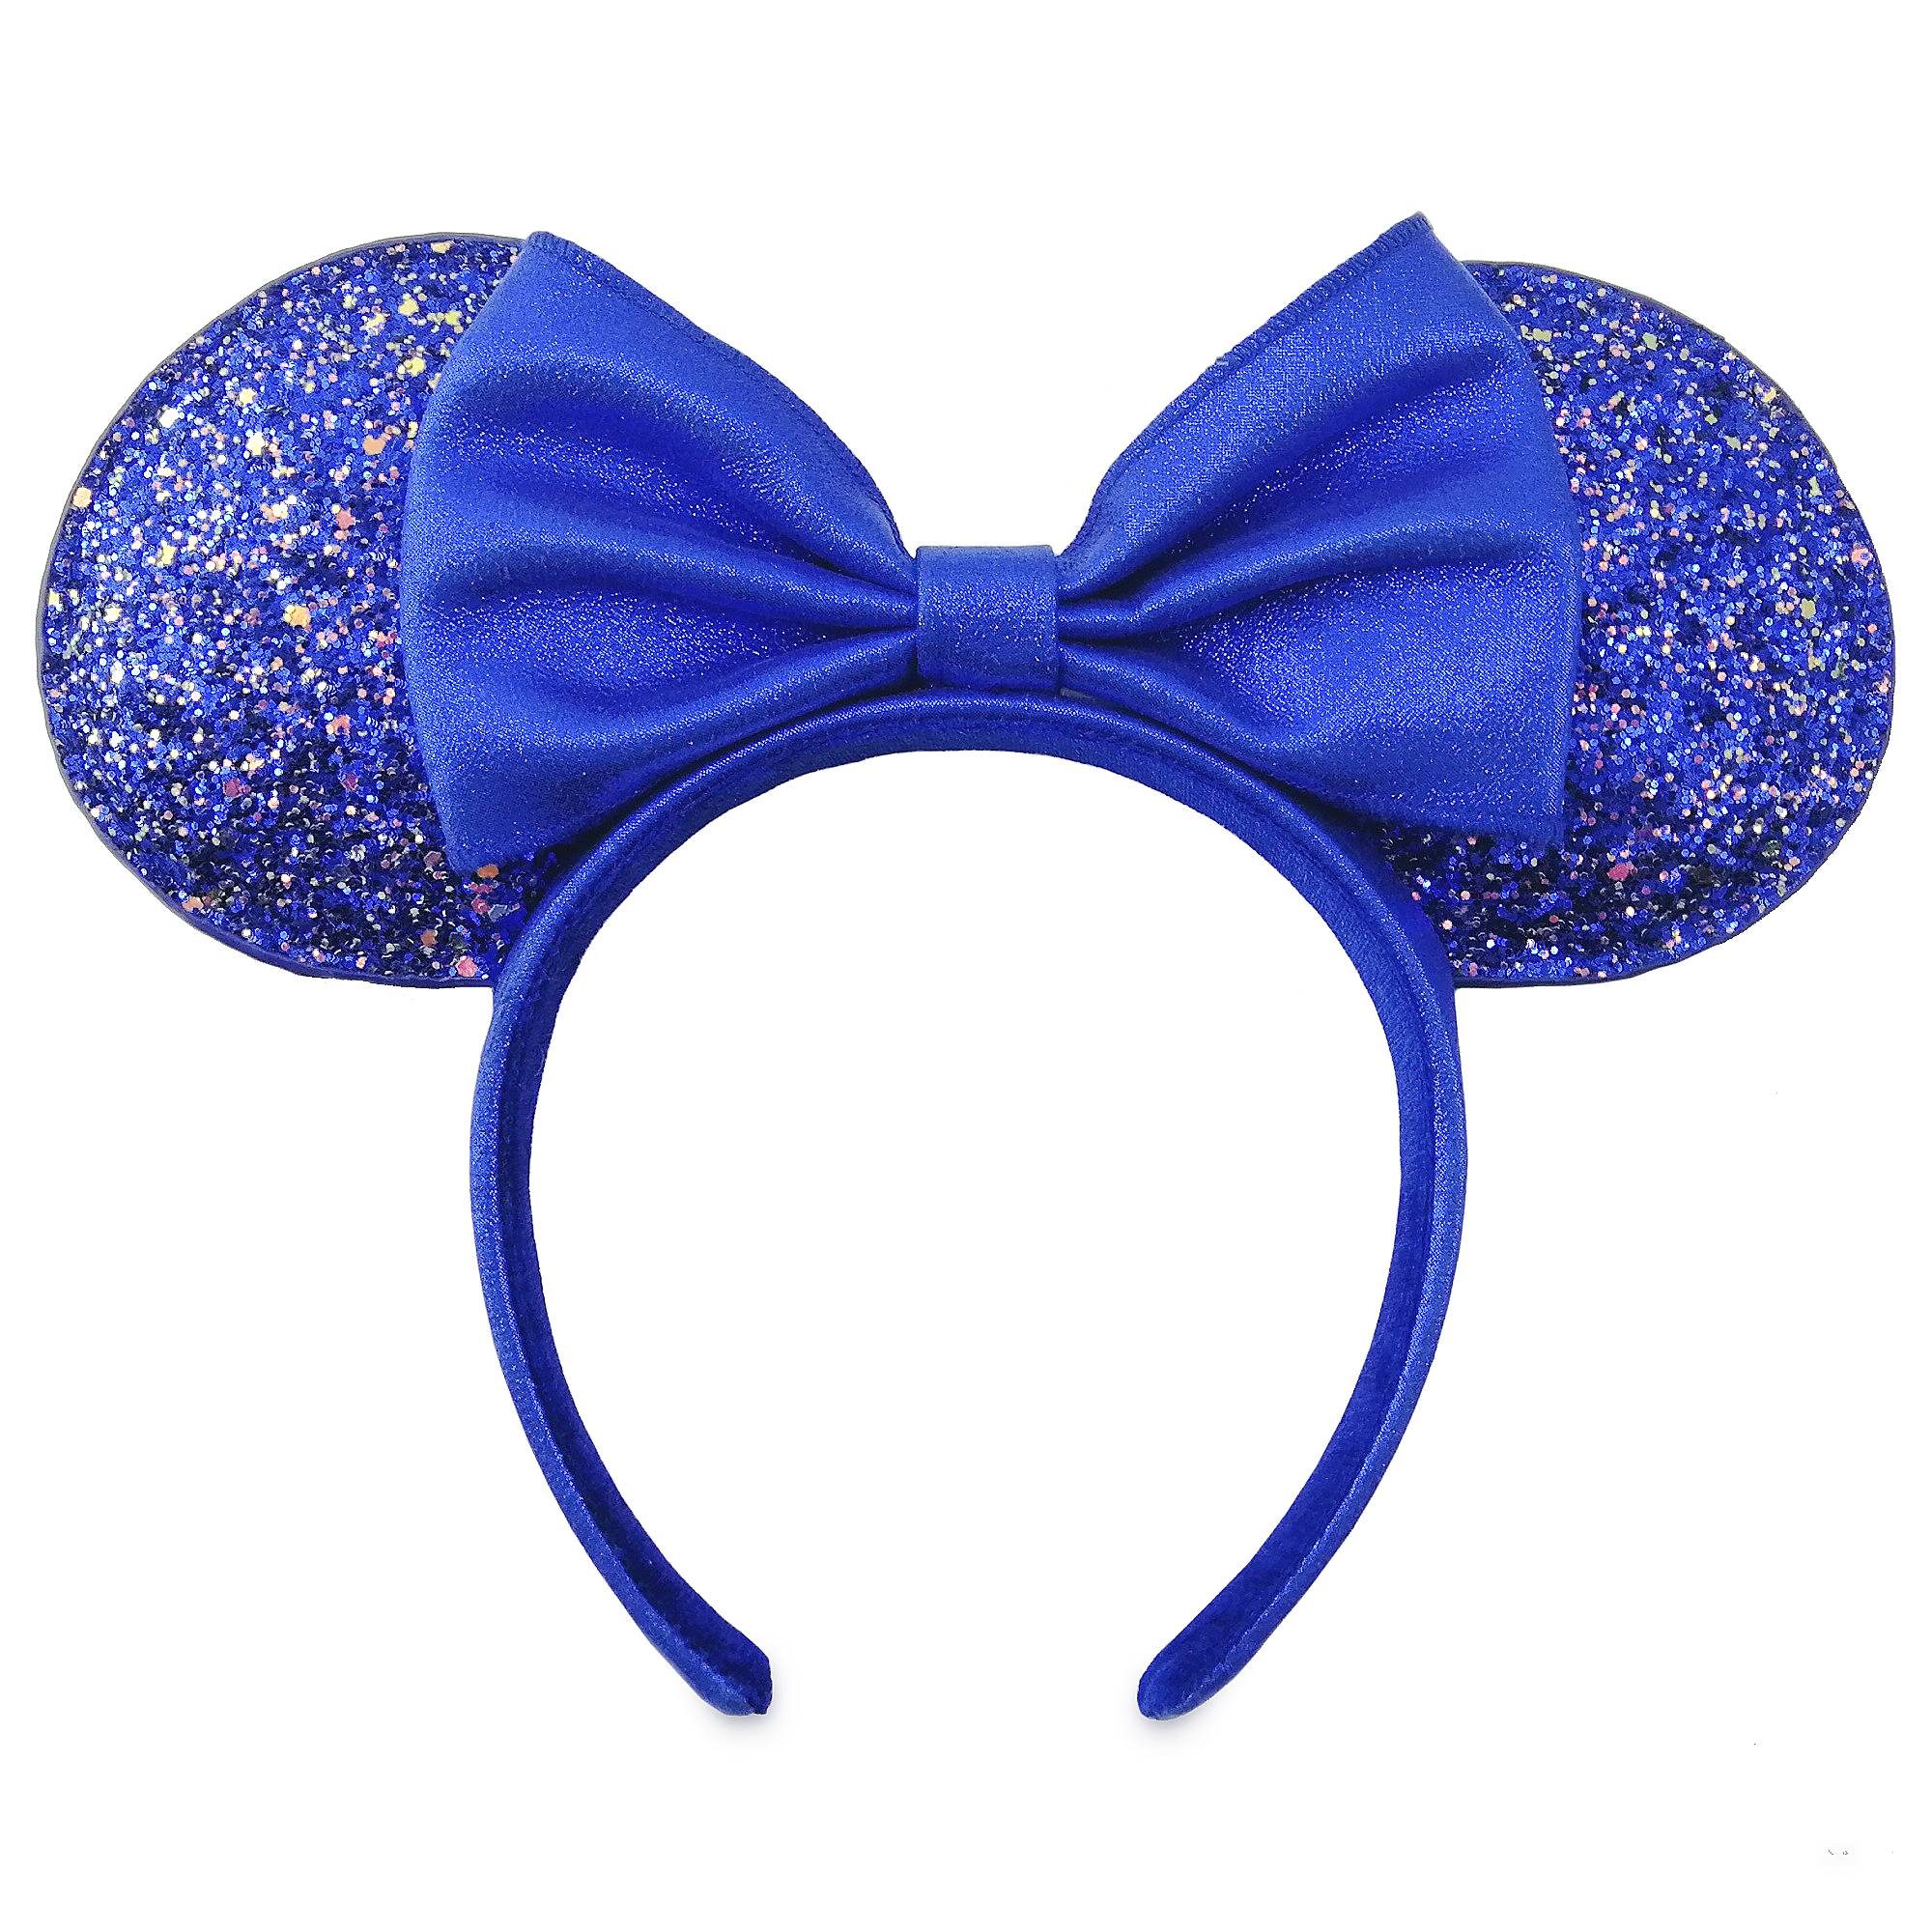 Minnie Mouse Ear Headband – Wishes Come True Blue image